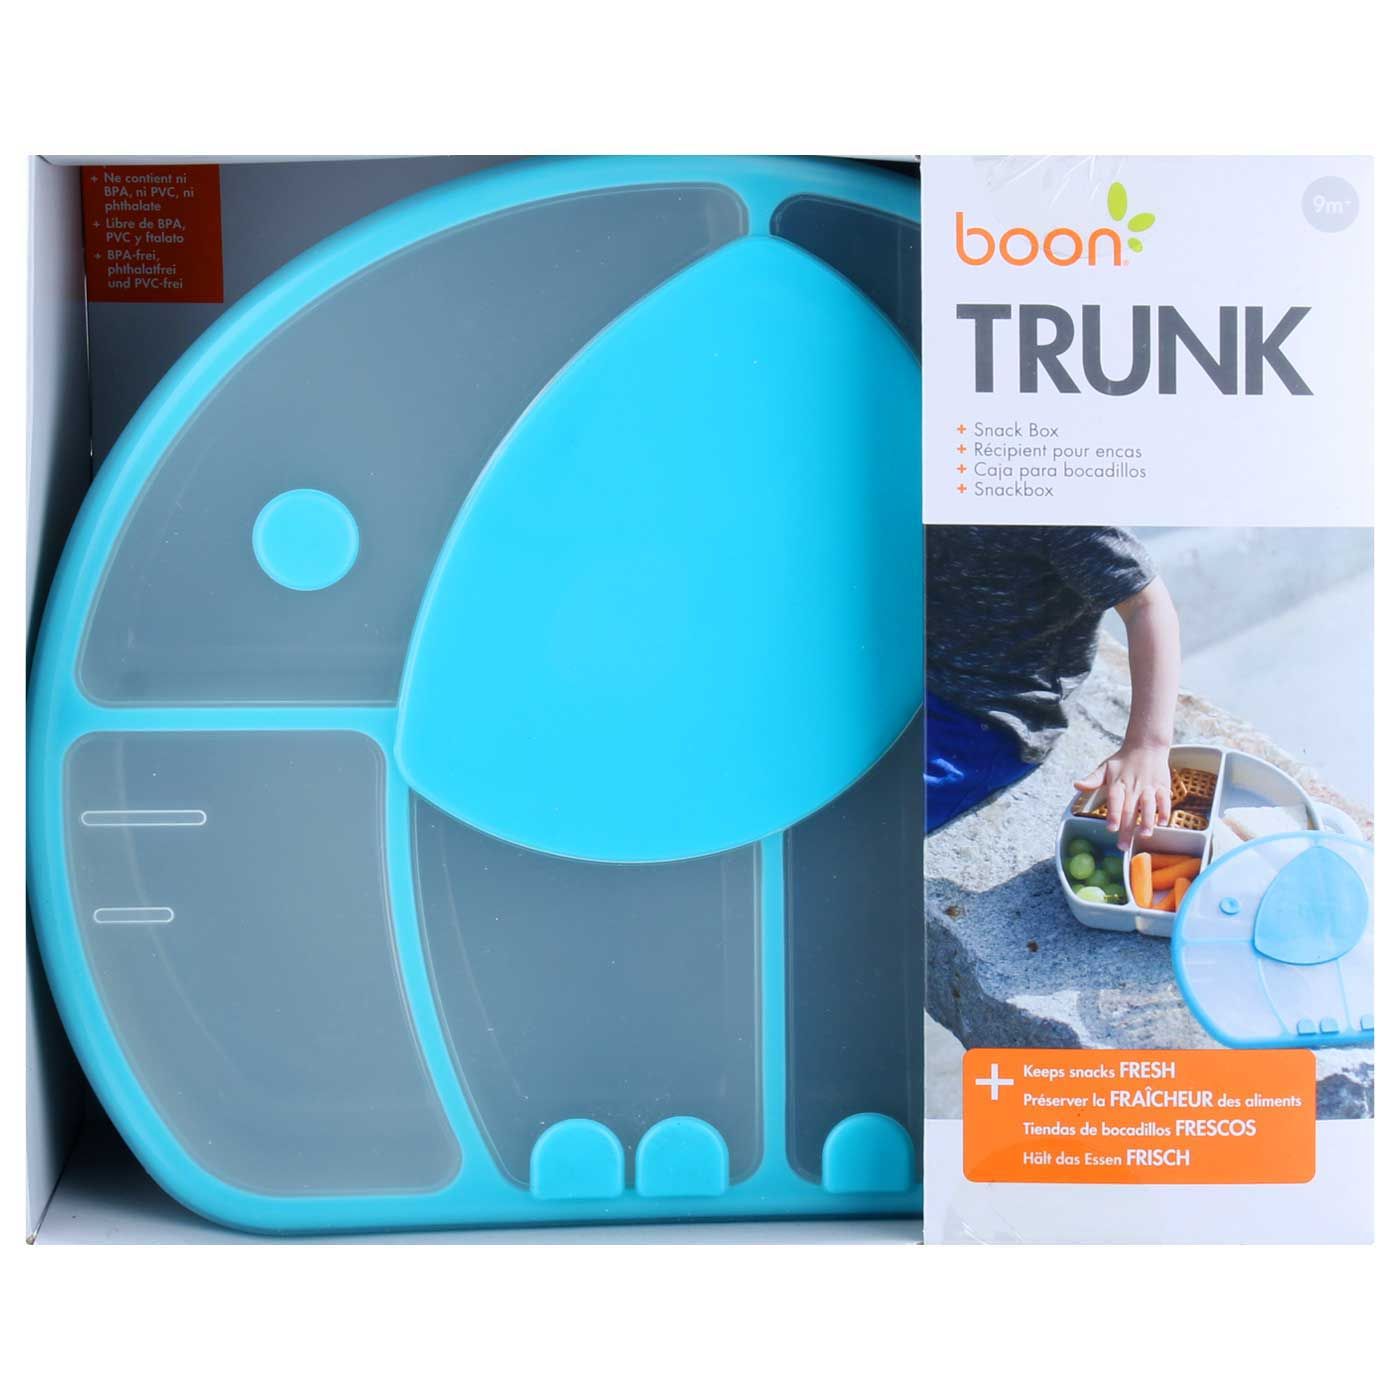 Boon Trunk Snack Box (Gray-Blue) - 869 - 2